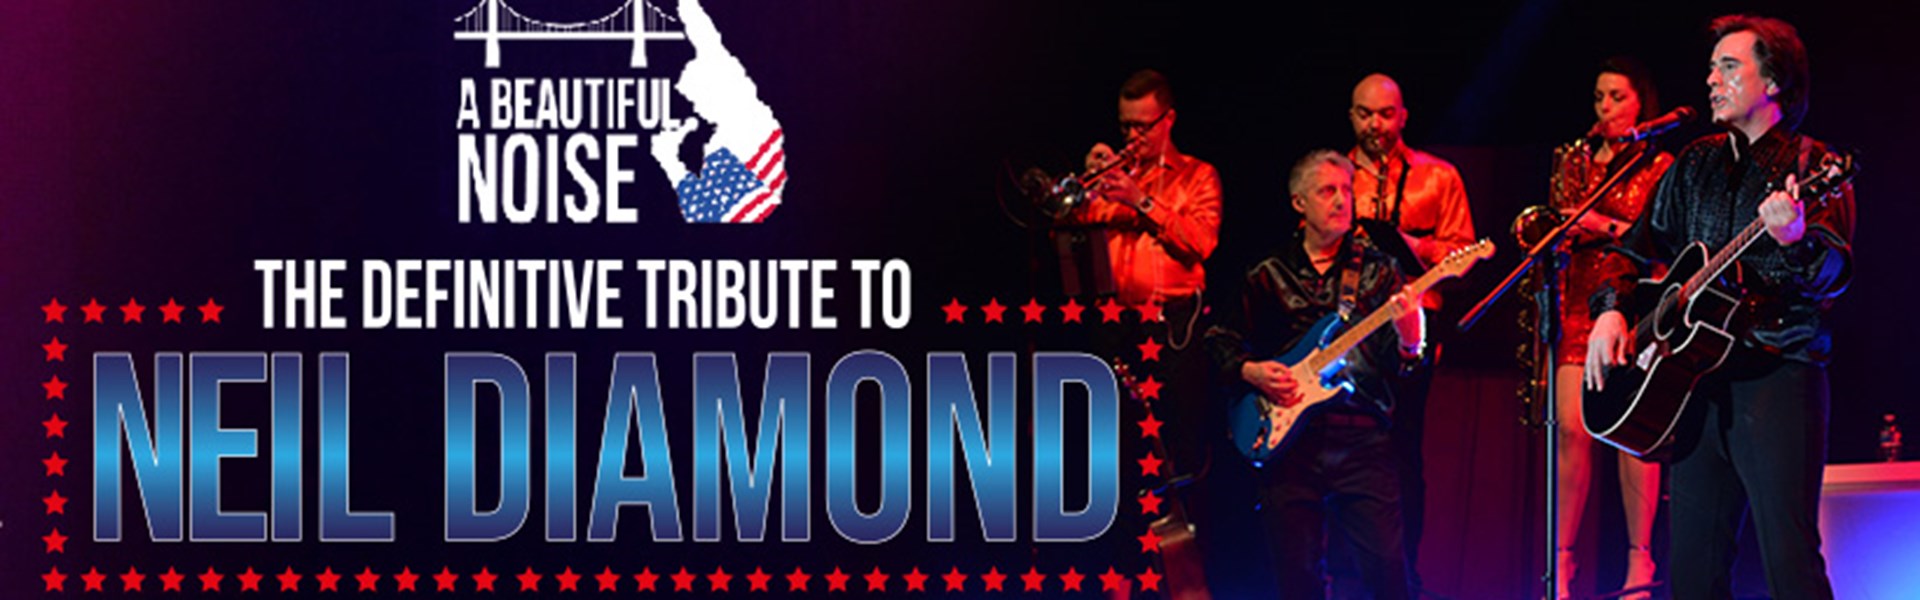 A Beautiful Noise - A Tribute to Neil Diamond